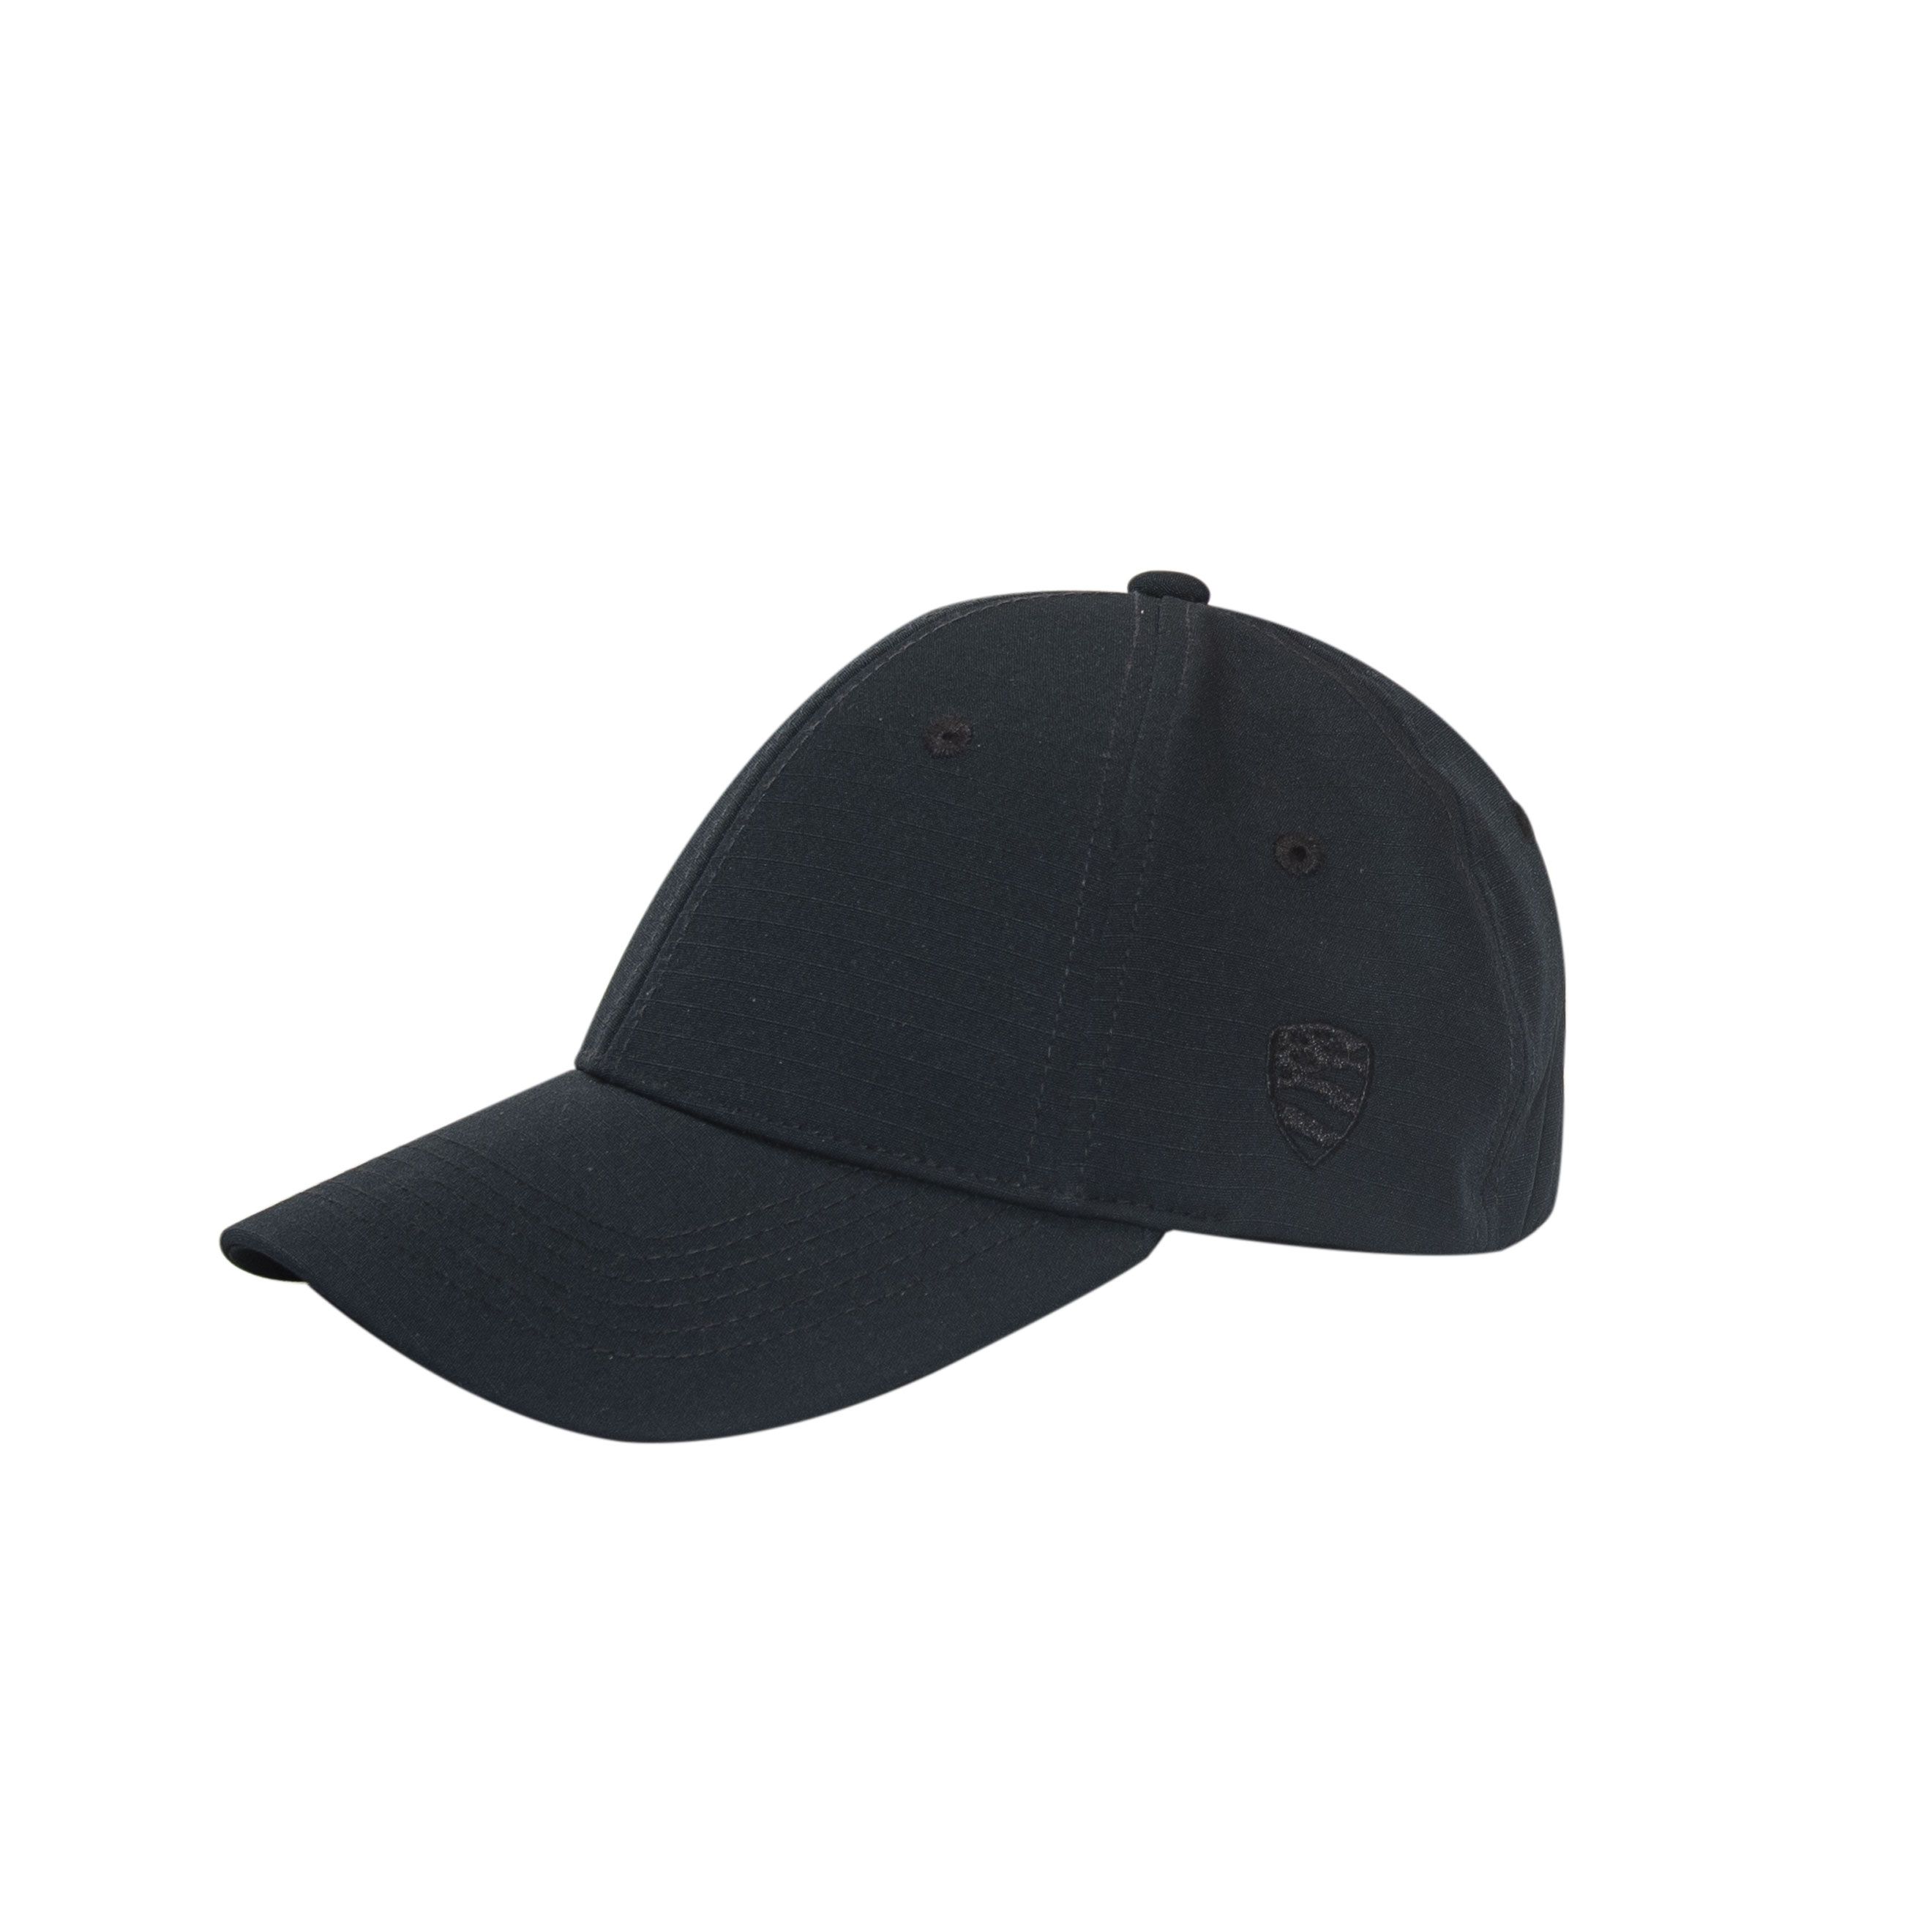 197 - FlexRS Fitted Cap - Summer patrol hat - Blauer